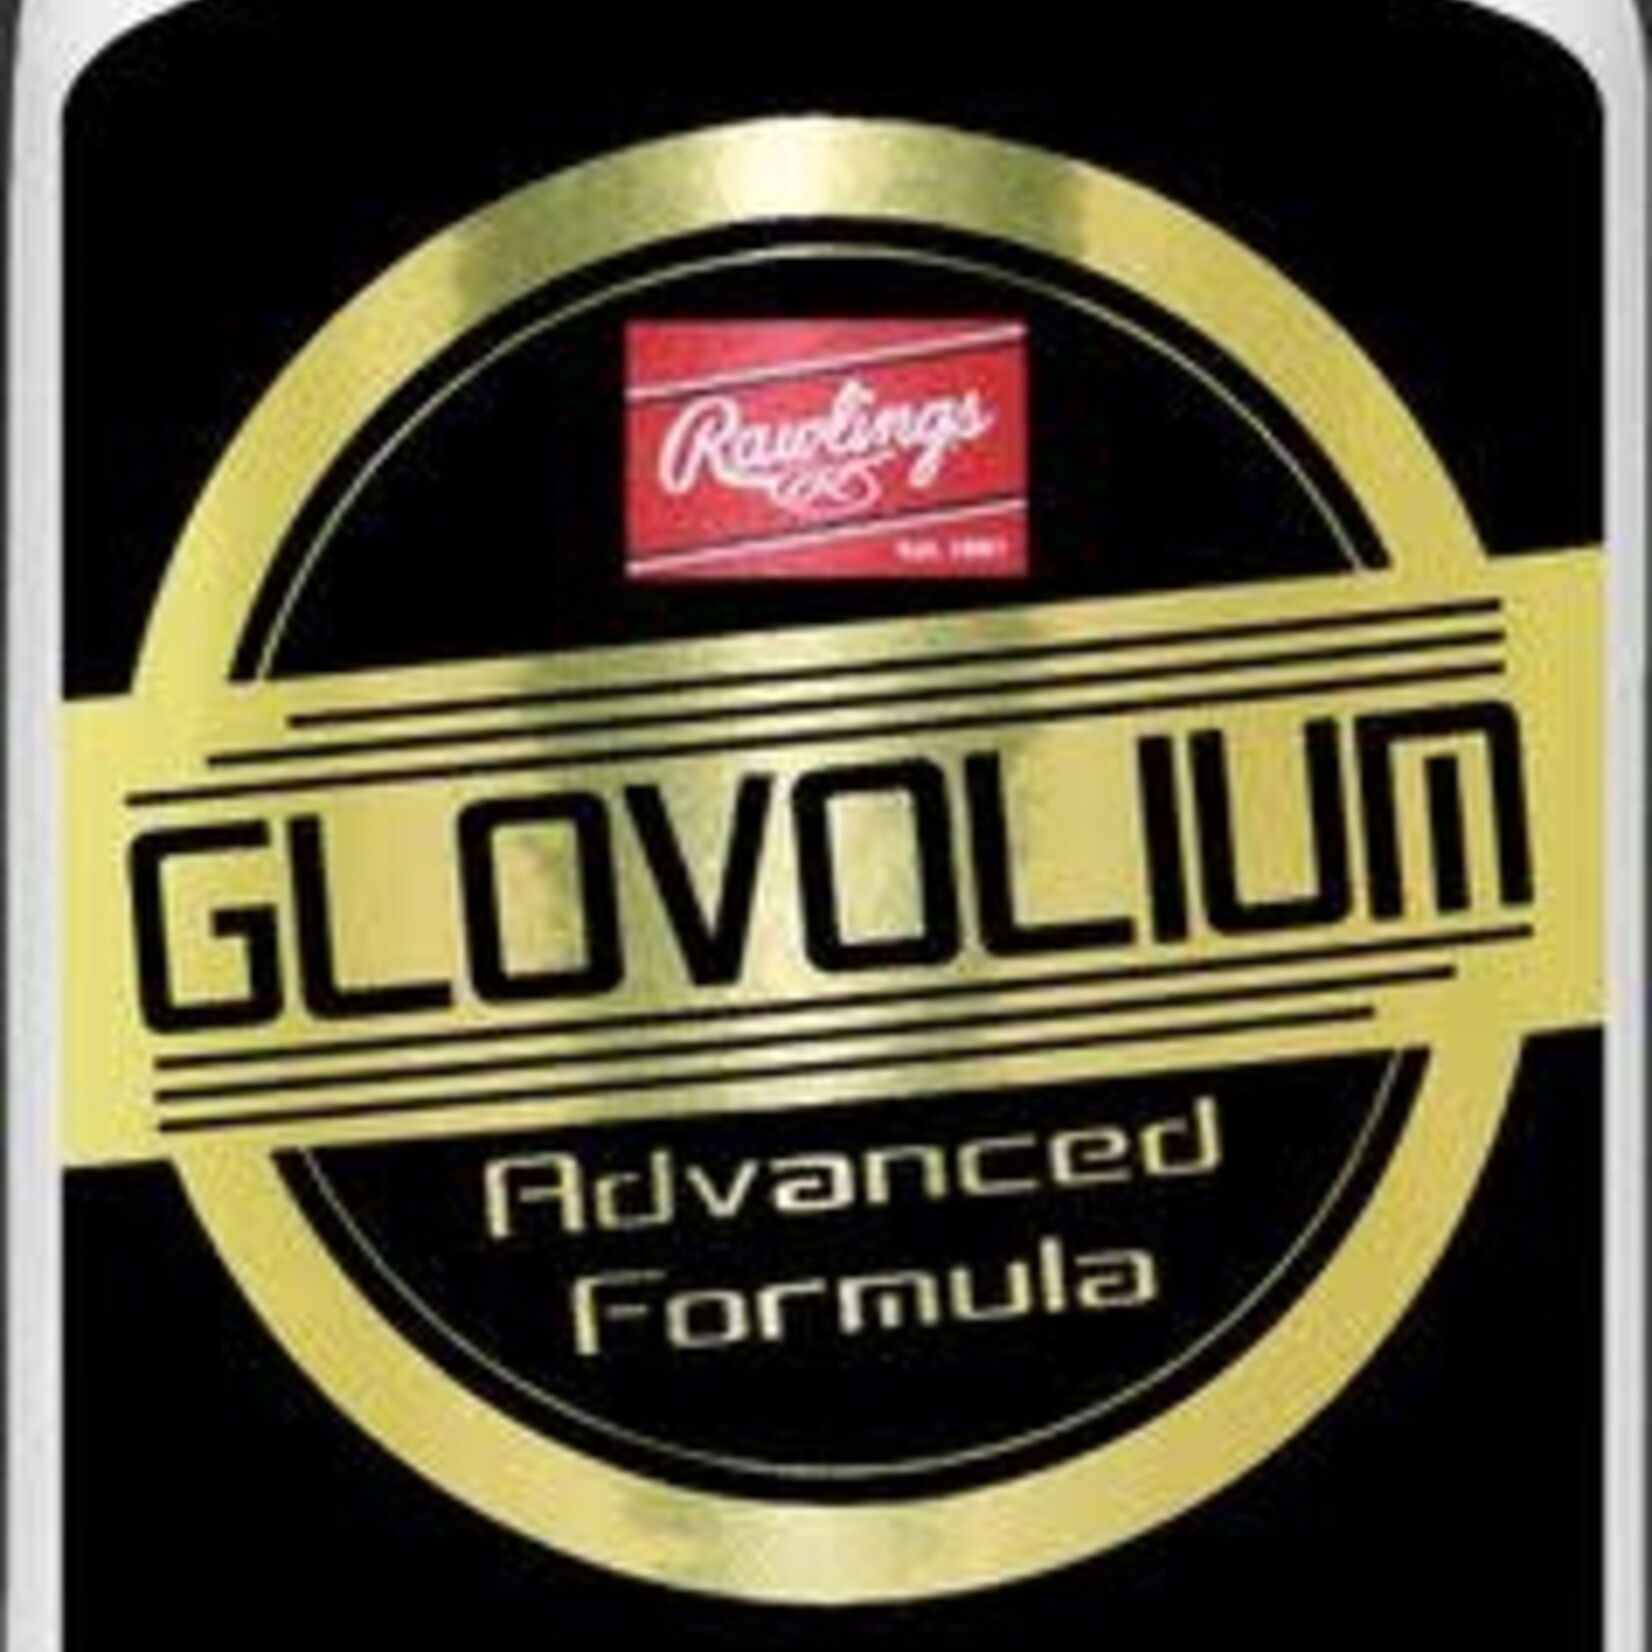 Rawlings Rawlings Glove Oil, Glovolium, 5oz